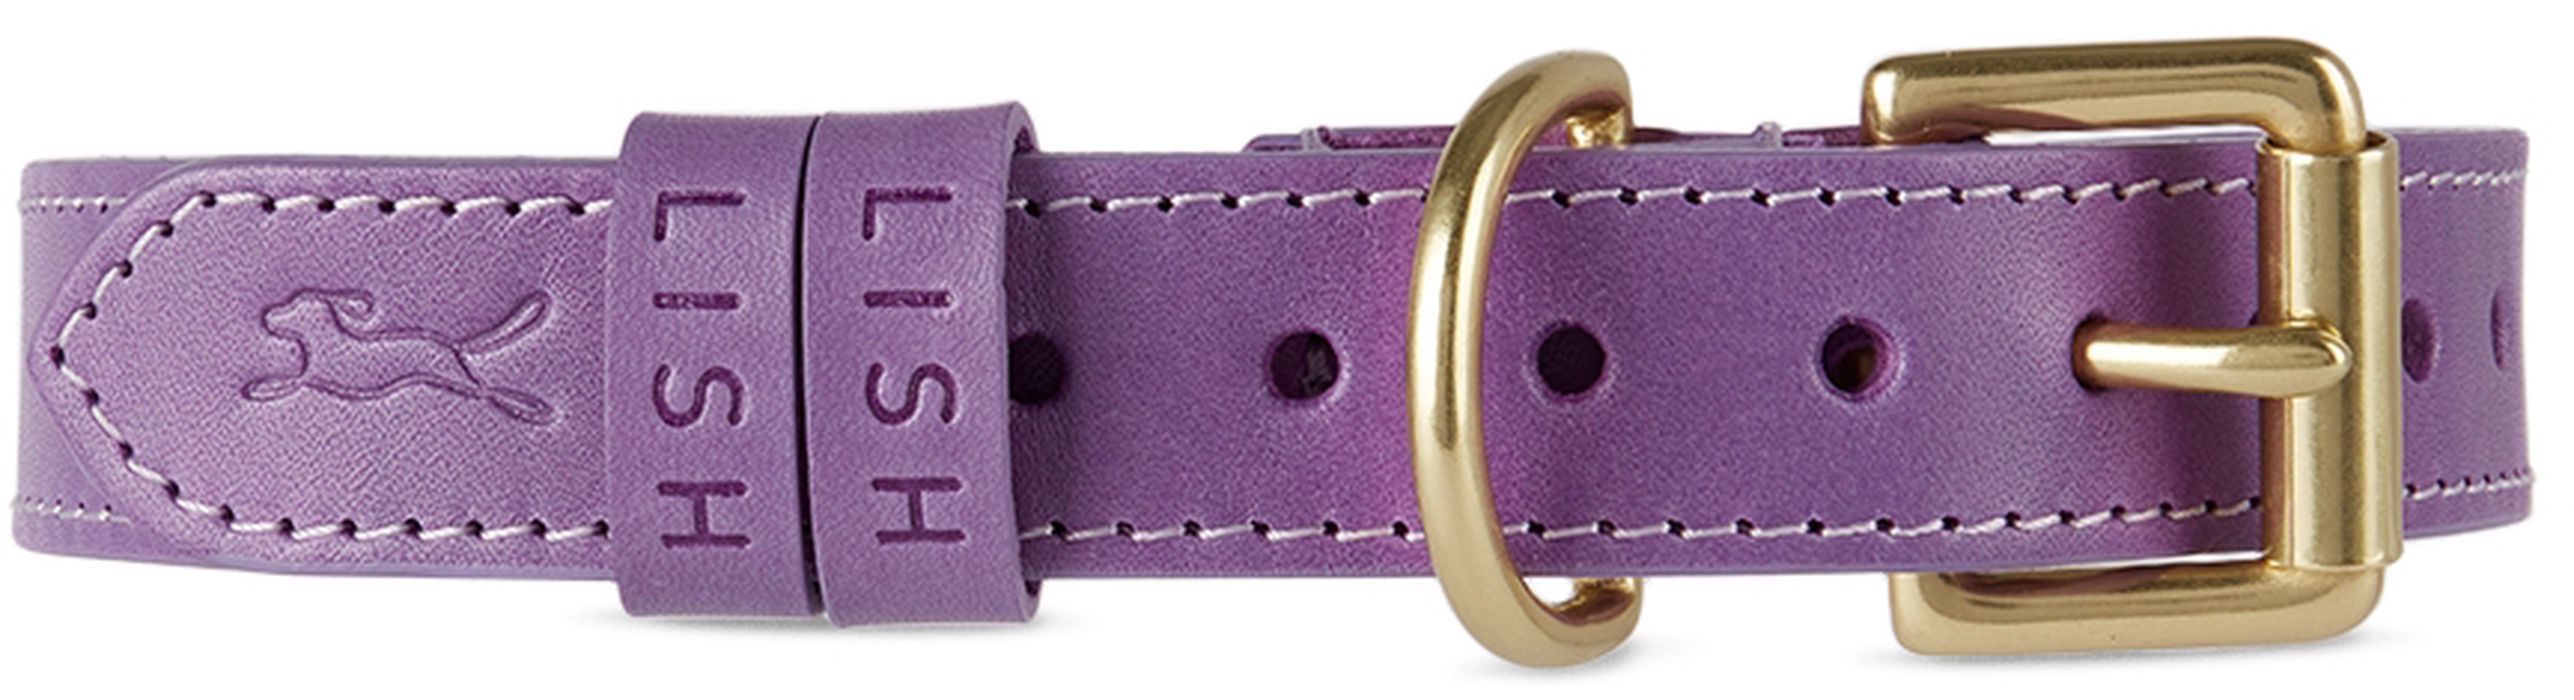 LISH Purple Large Coopers Collar